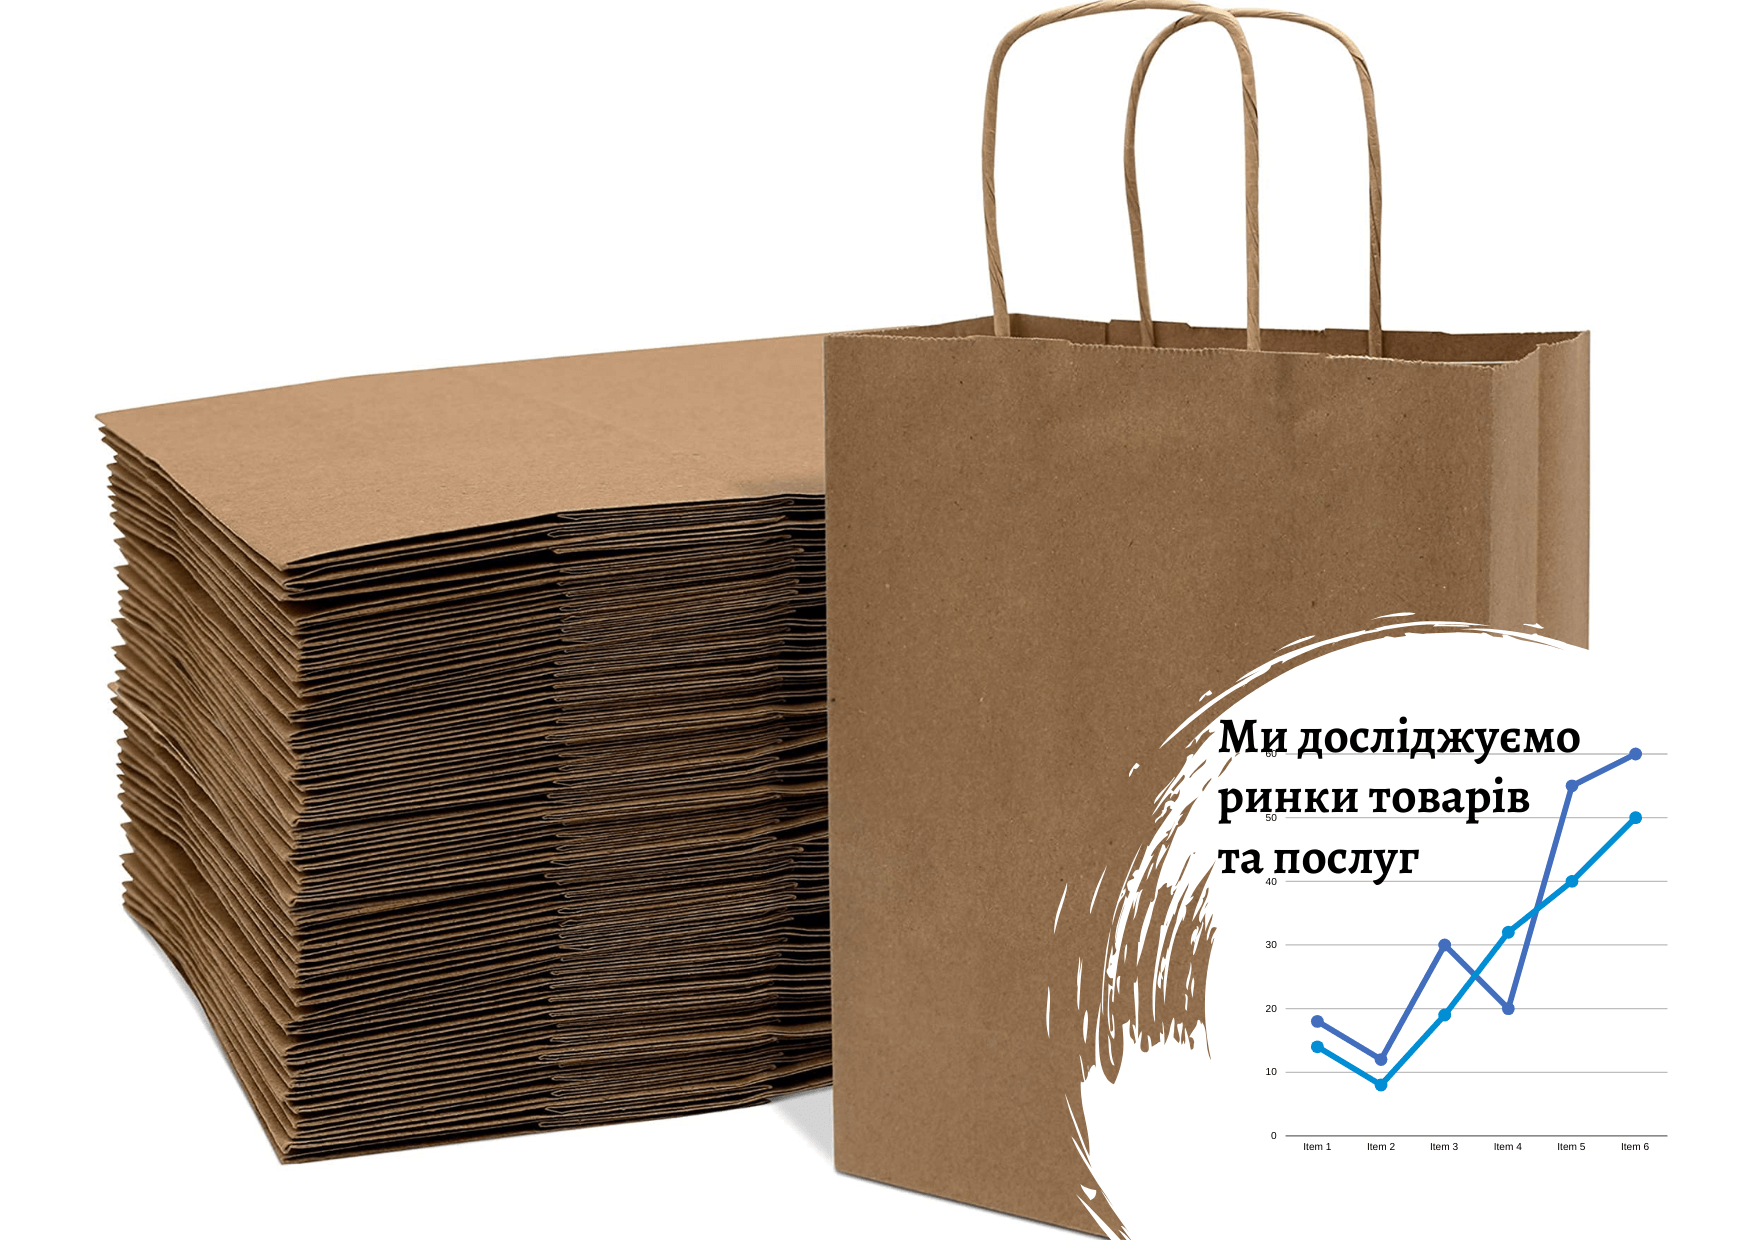 Ukrainian paper bags market: main consumer trends 